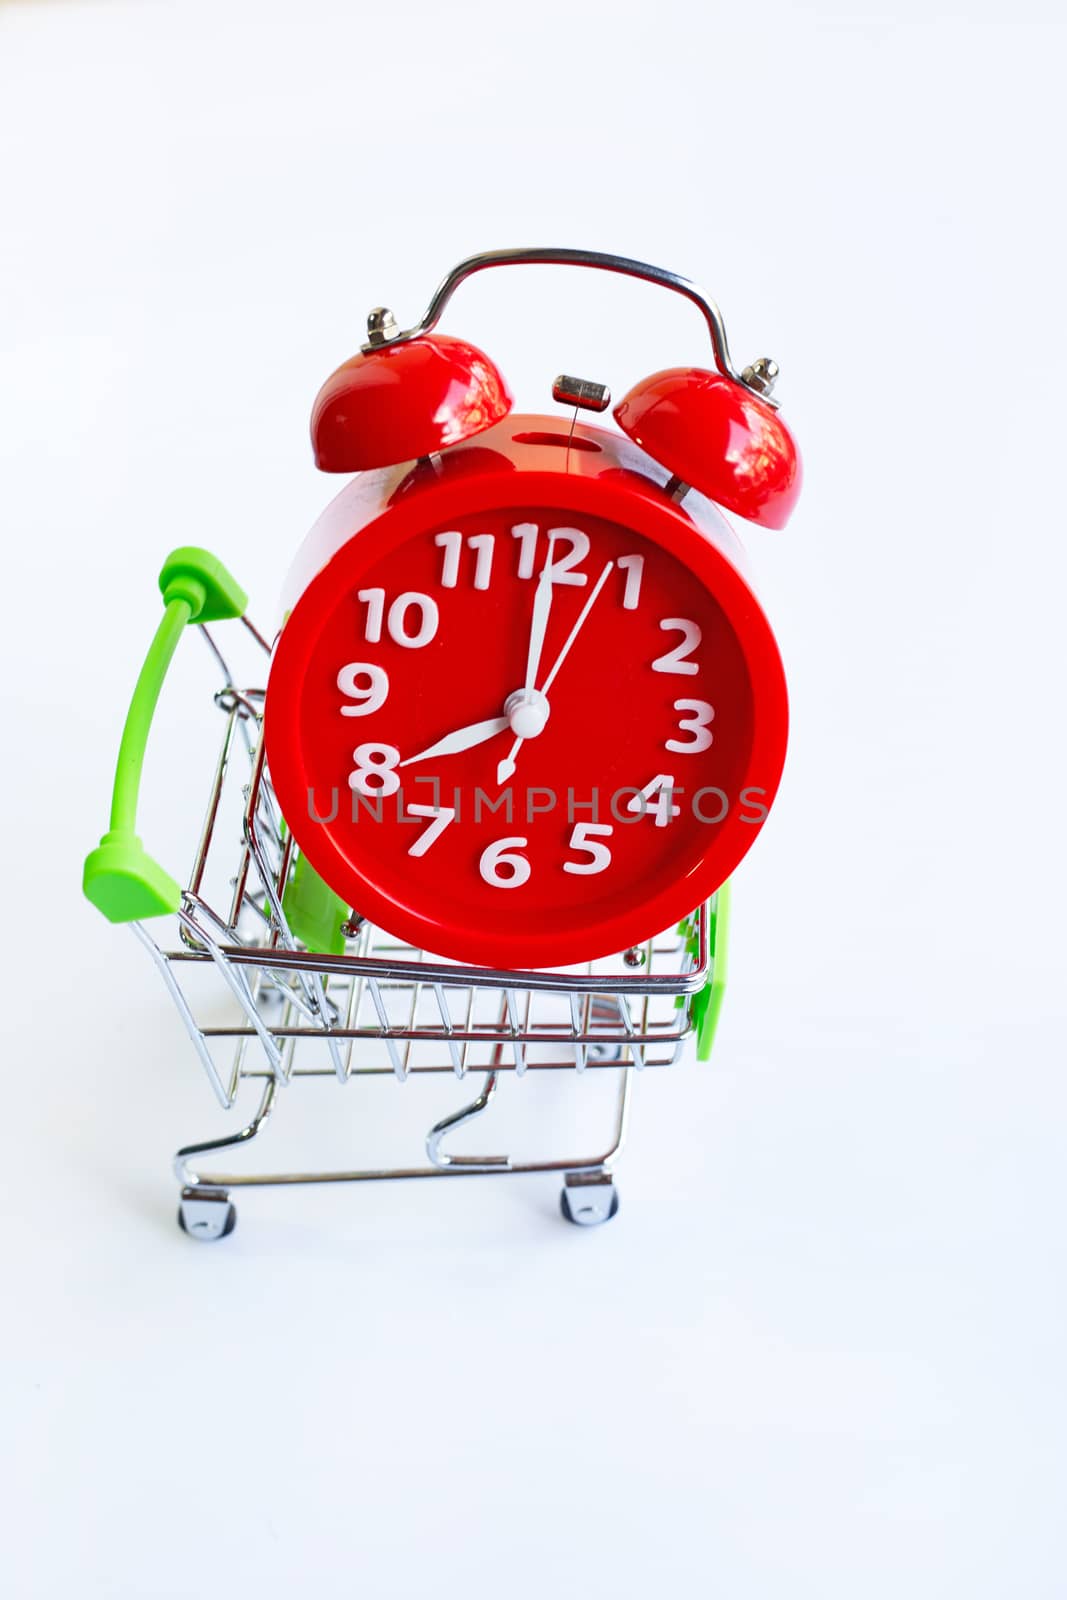 Alarm clock on shopping cart  by Bowonpat